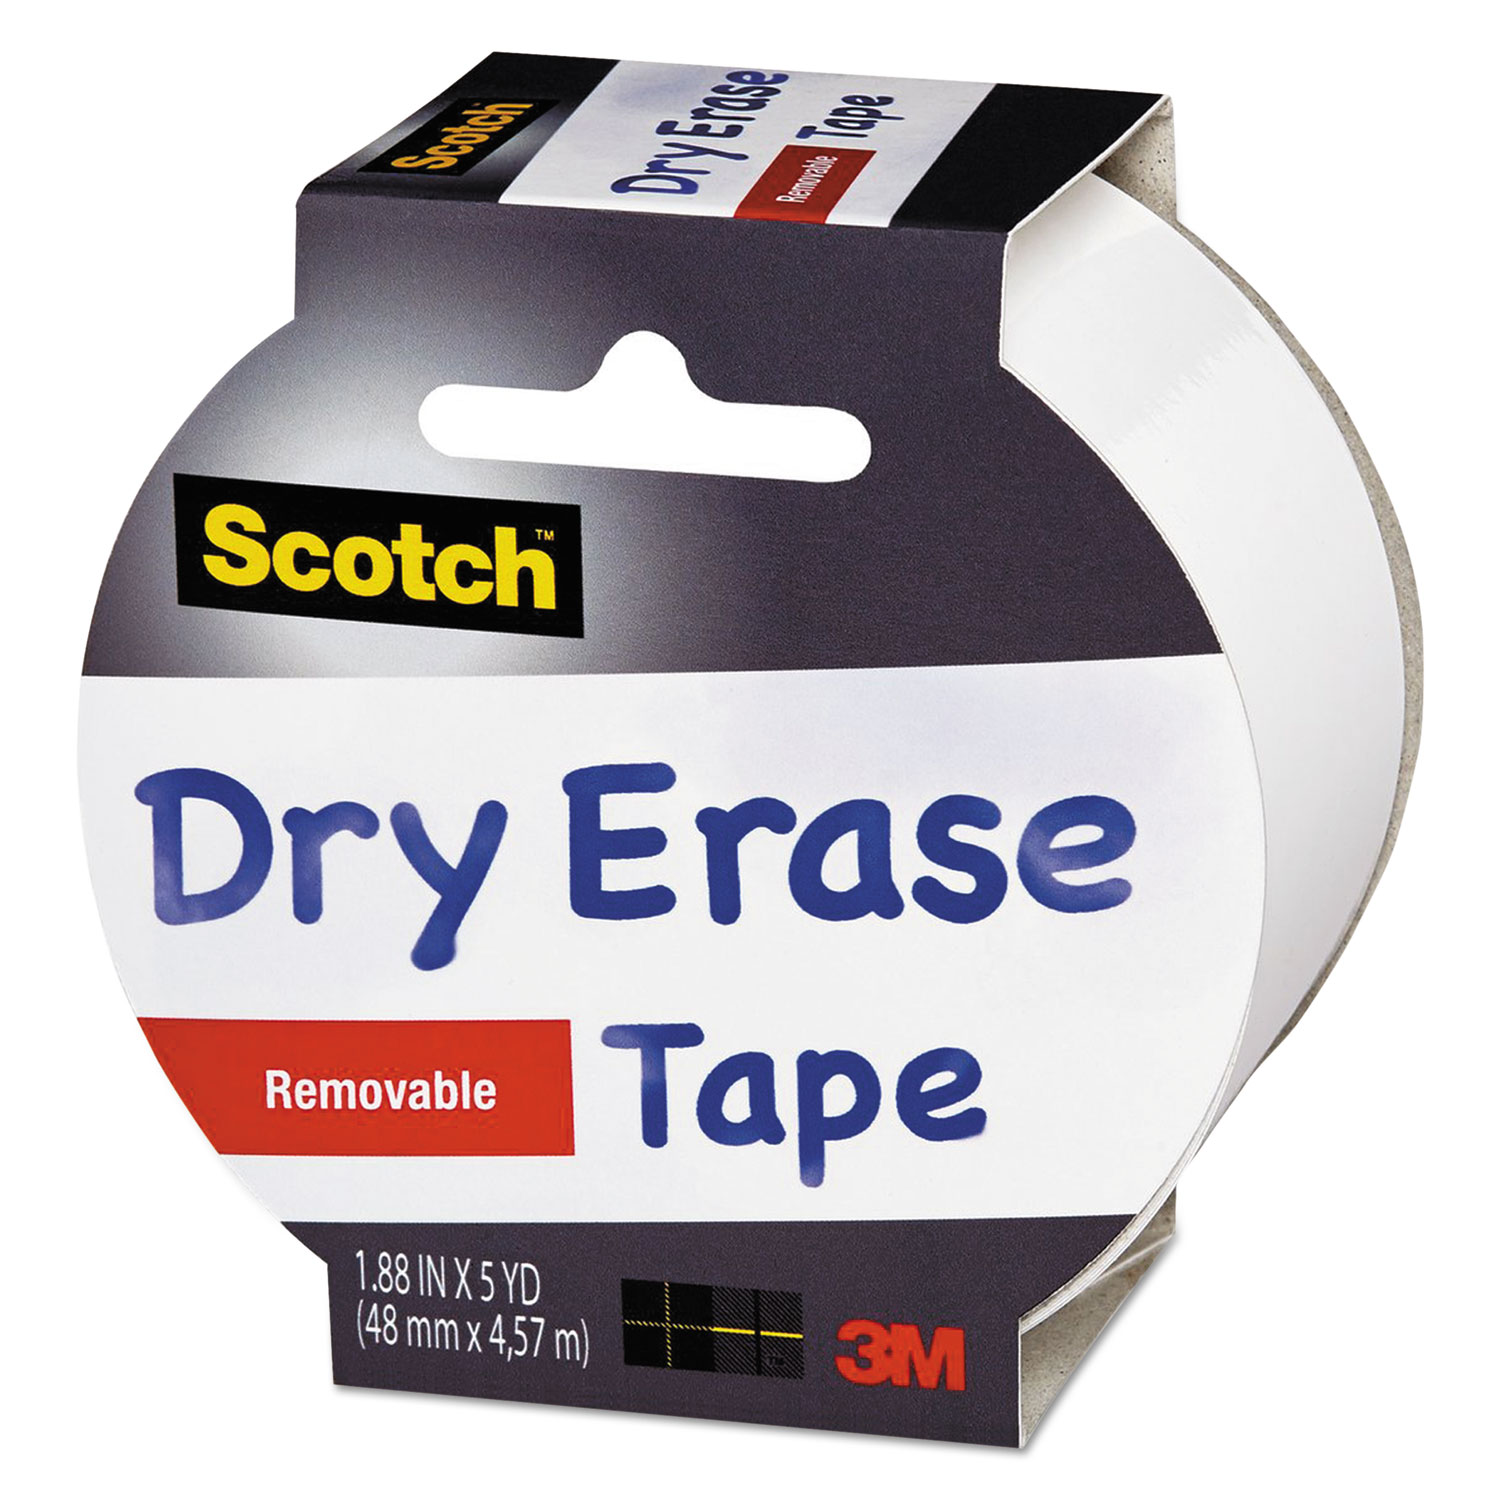 Dry Erase Tape, 1.88